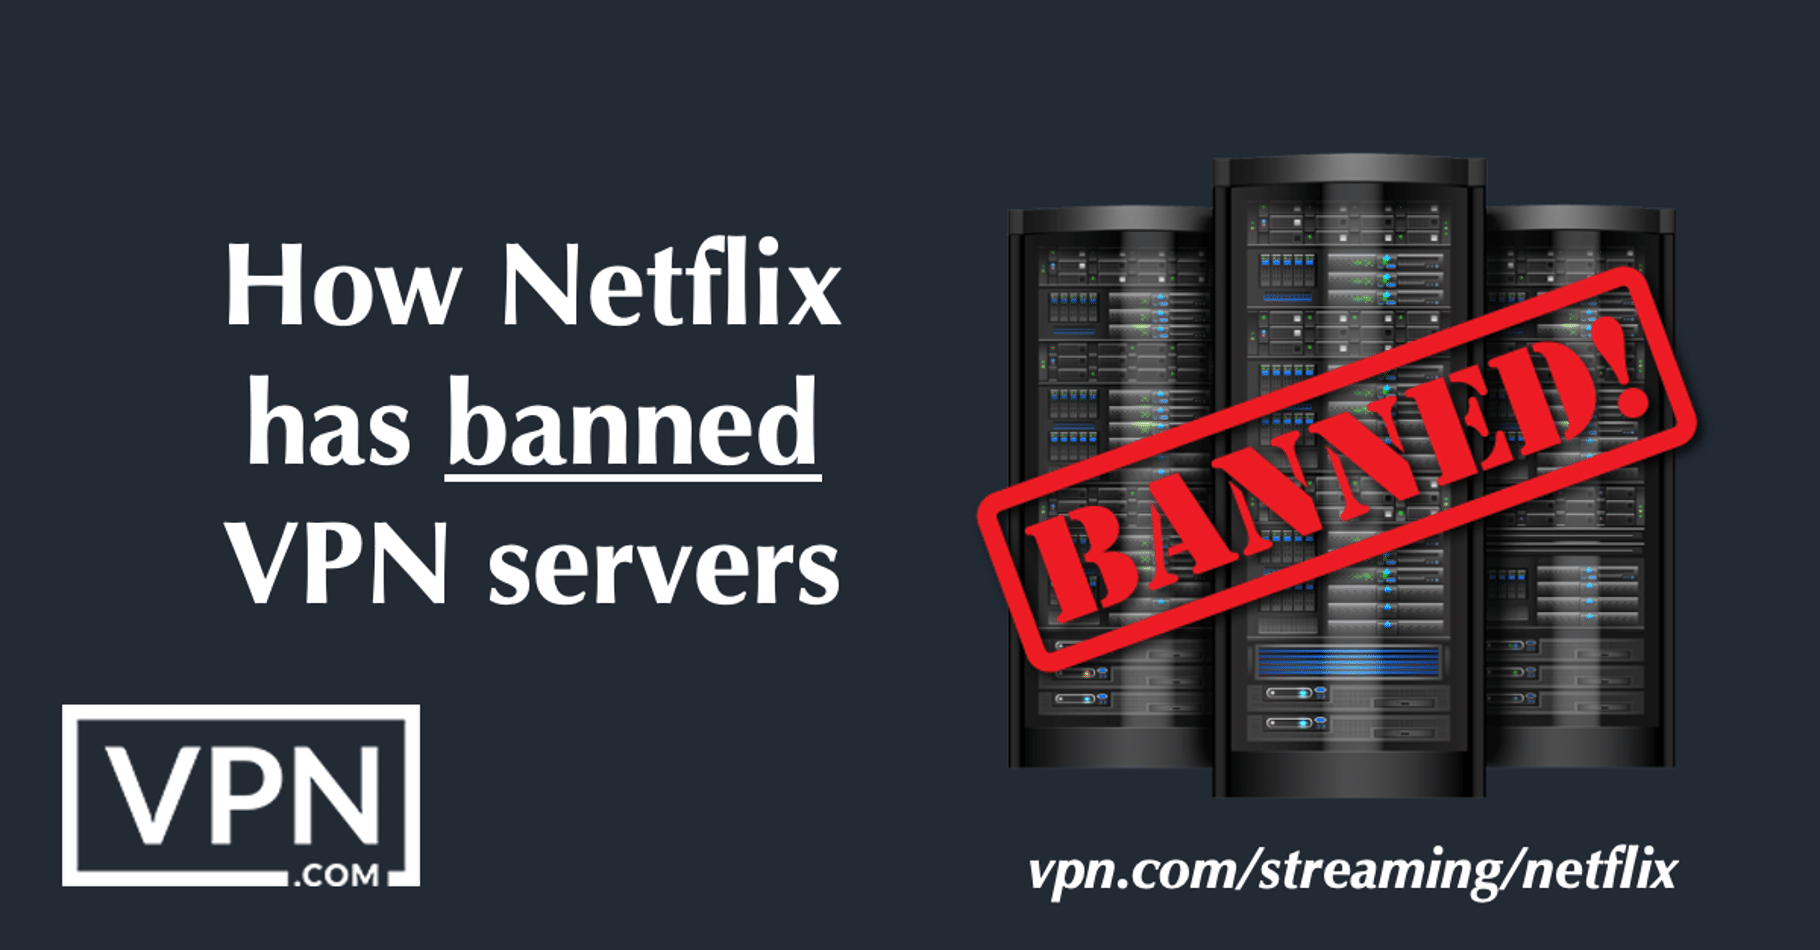 NetflixがVPNサーバーを禁止した経緯。